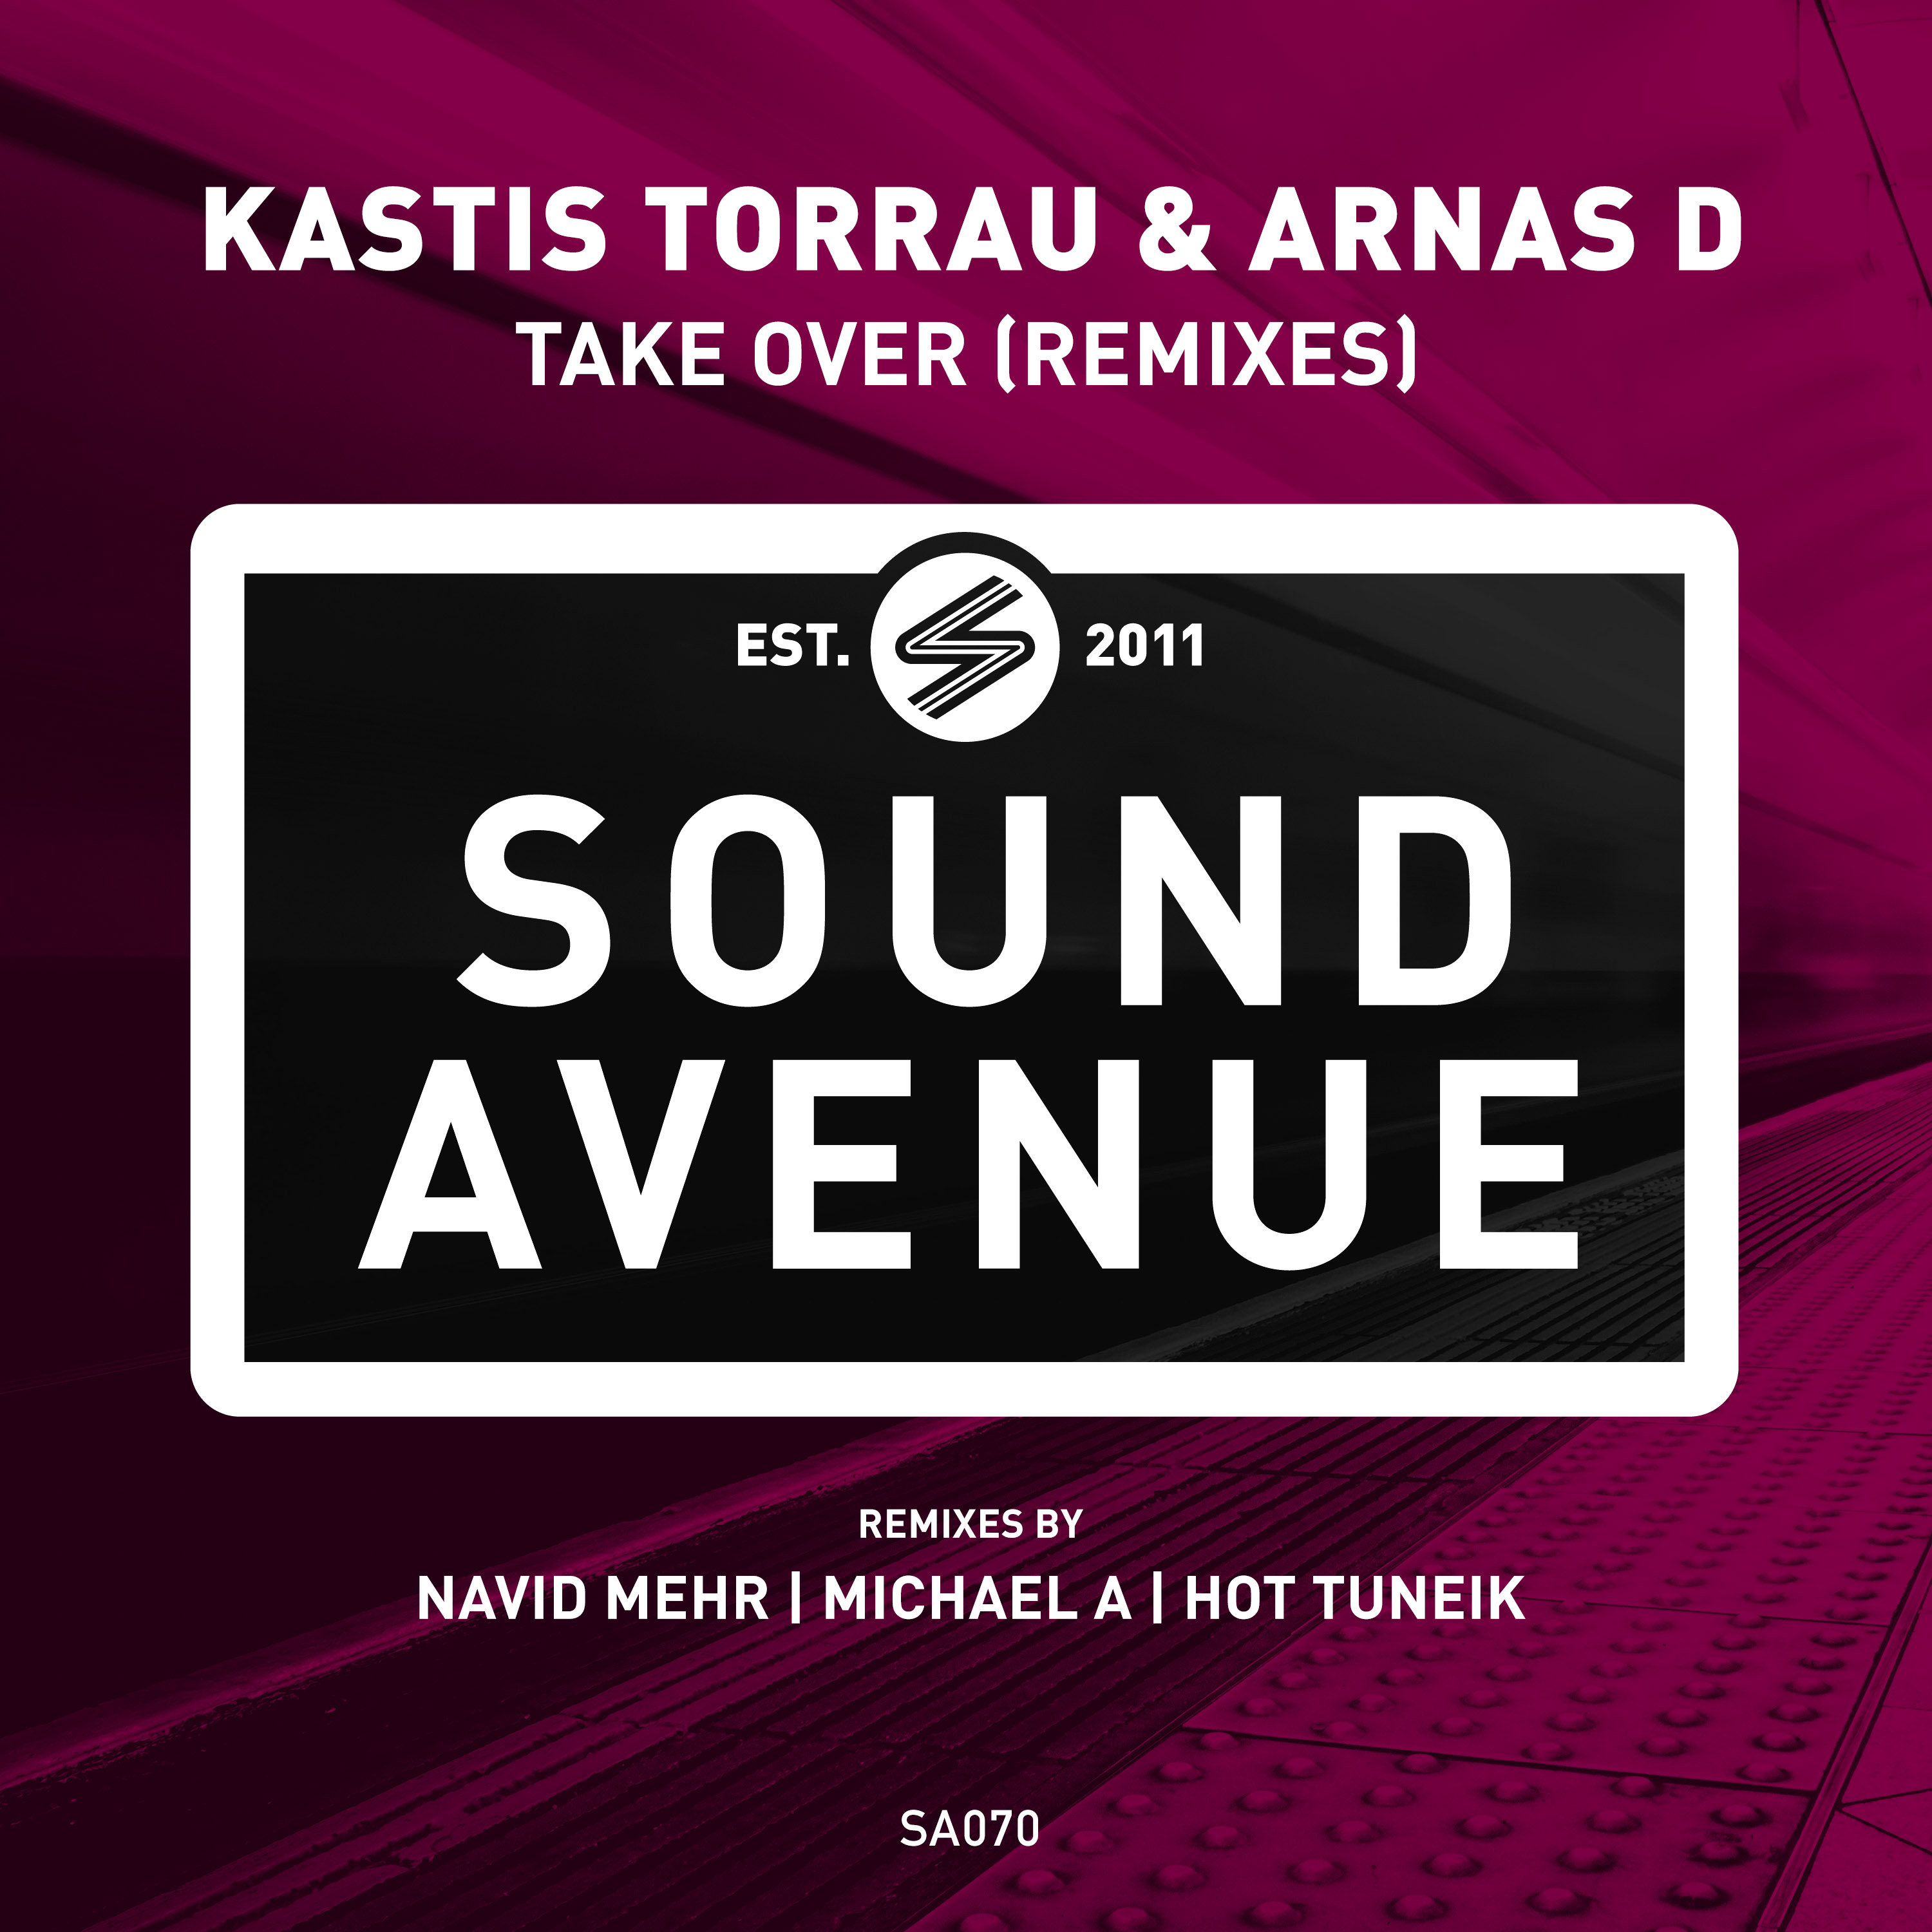 Kastis Torrau & Arnas D - Take Over Remixes (Sound Avenue) 